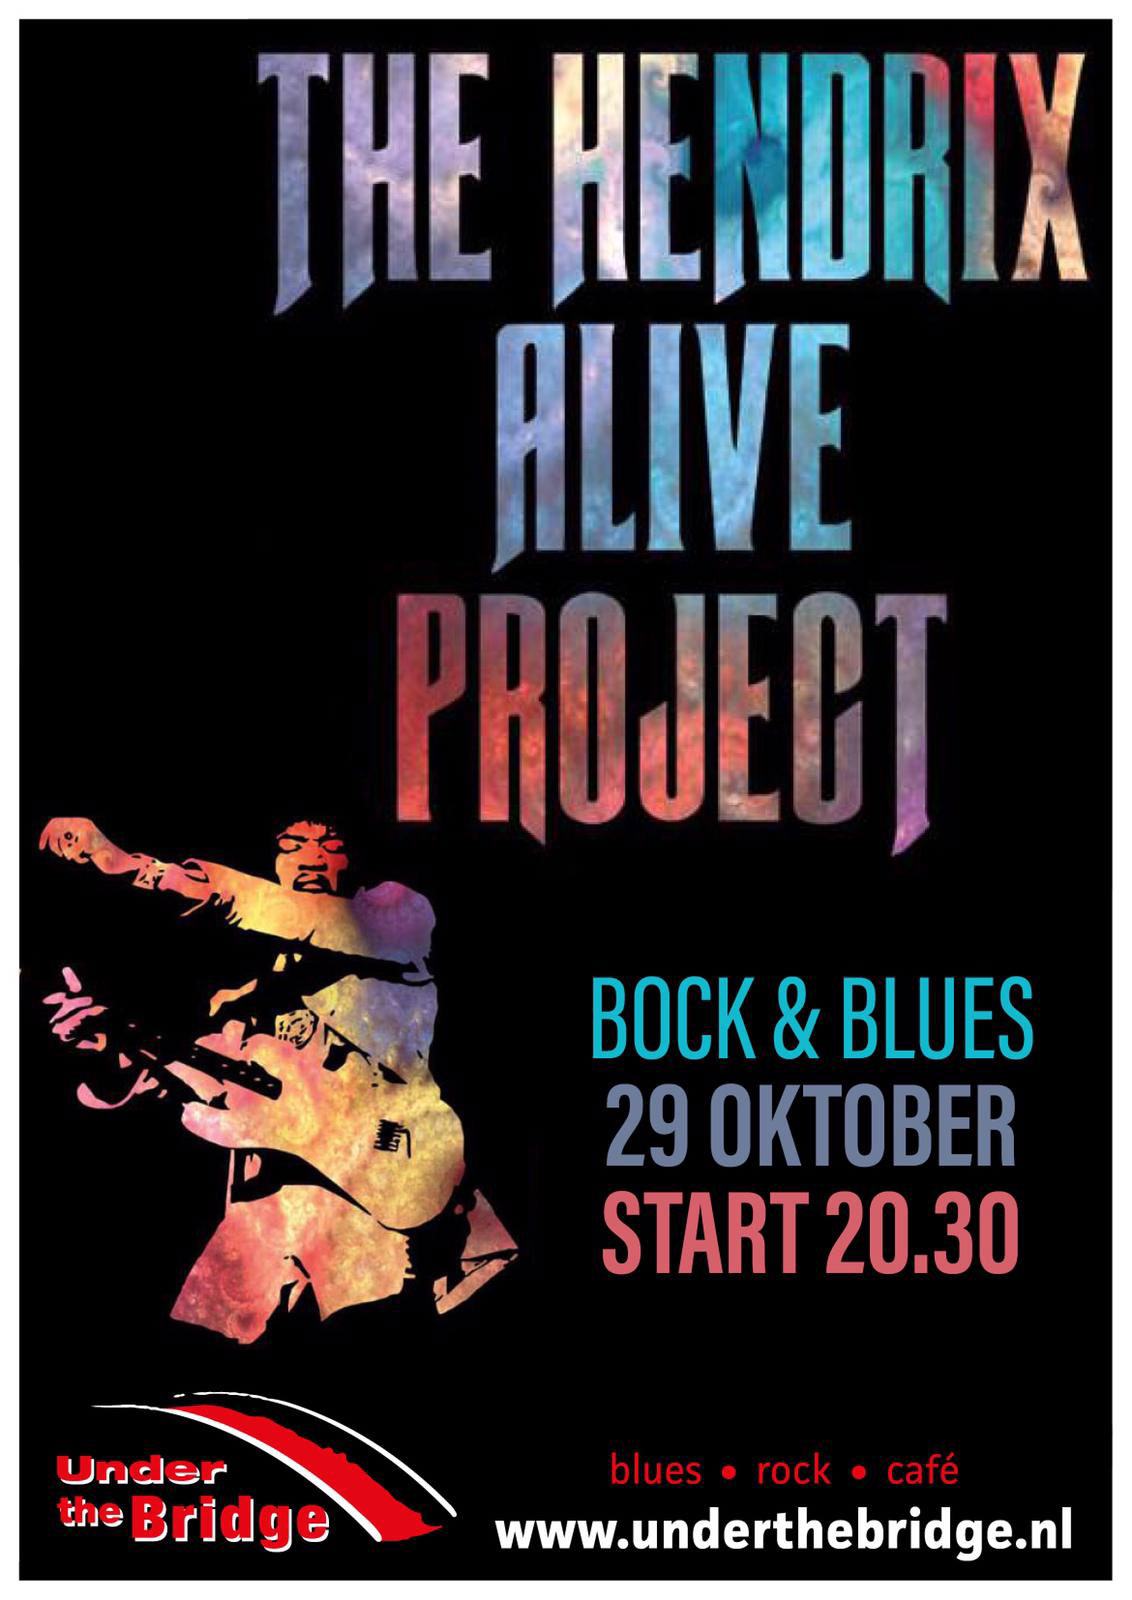 Hendrix Alive Project live in Under The Bridge